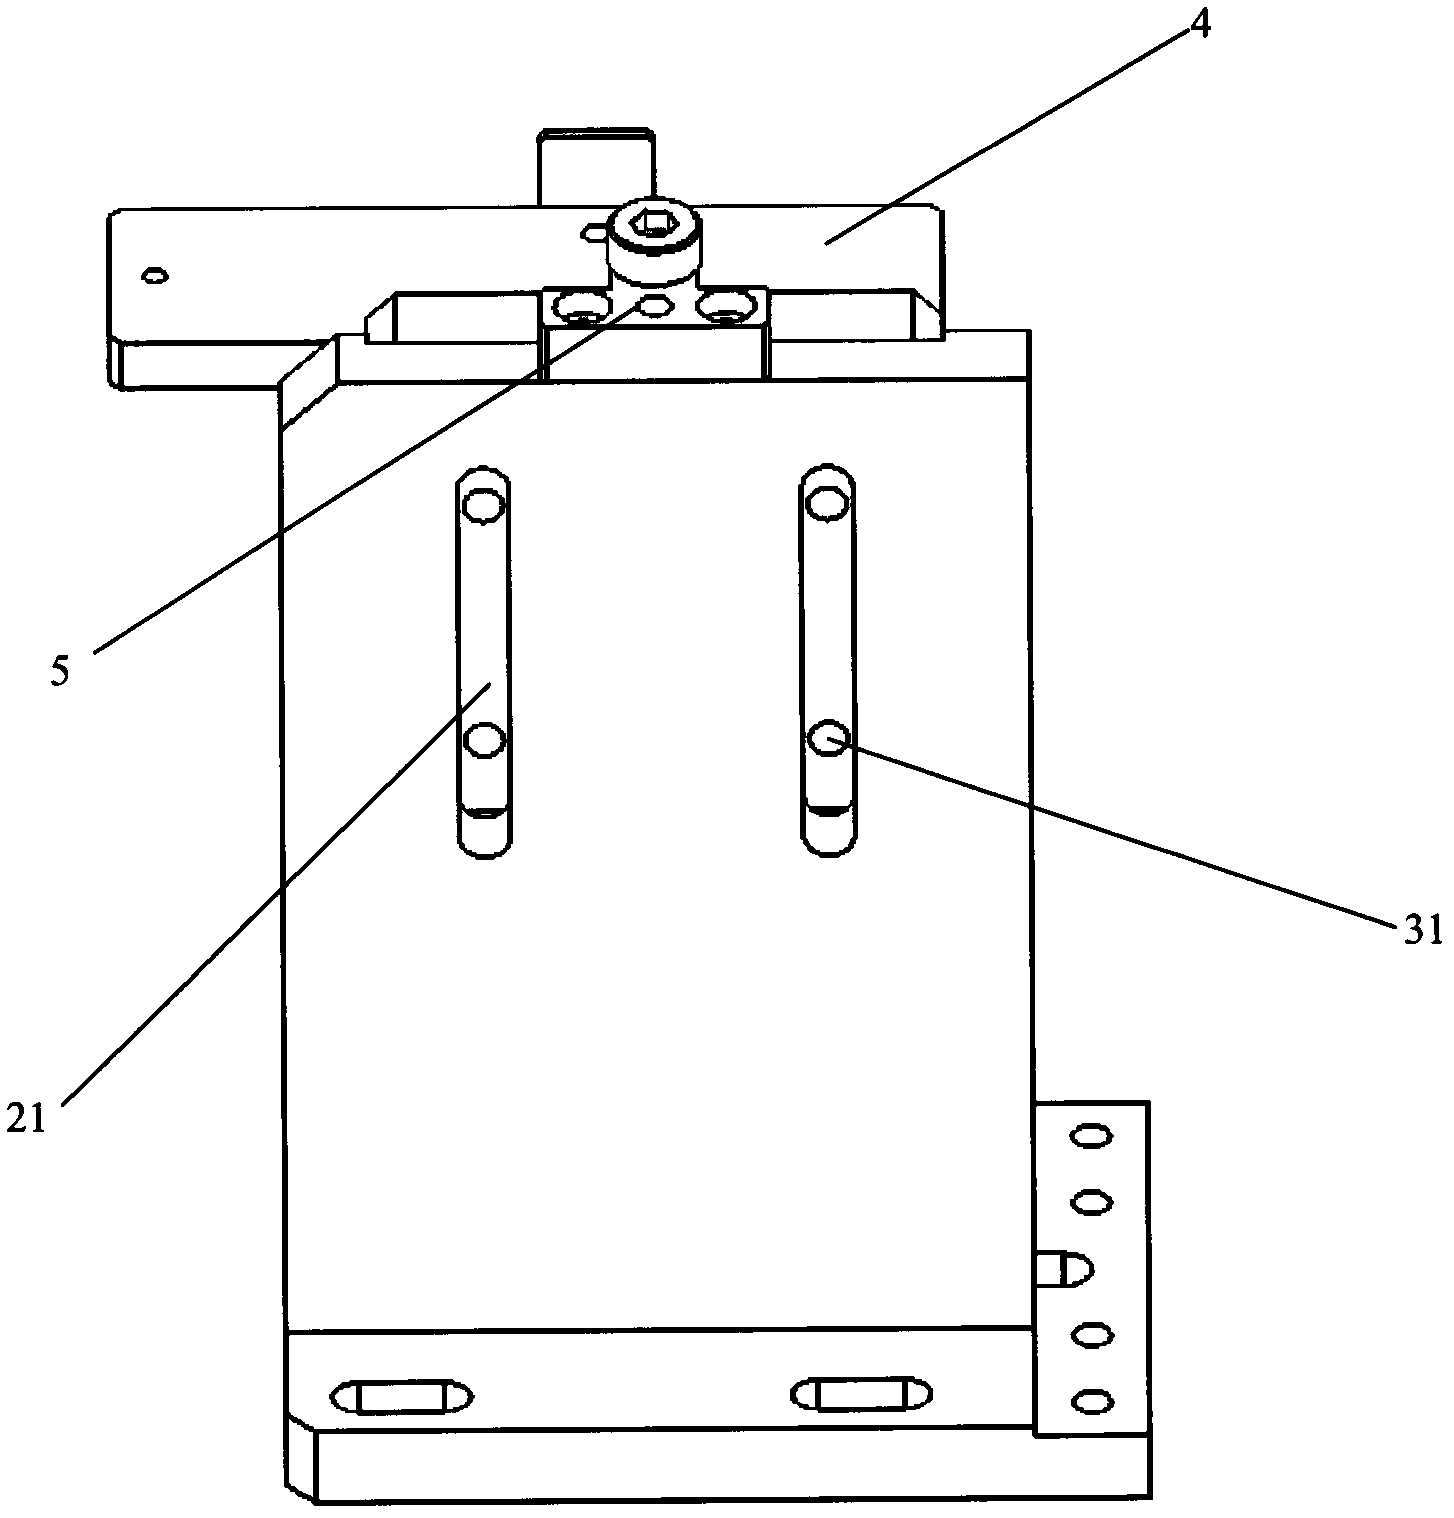 Oil box position adjustment device